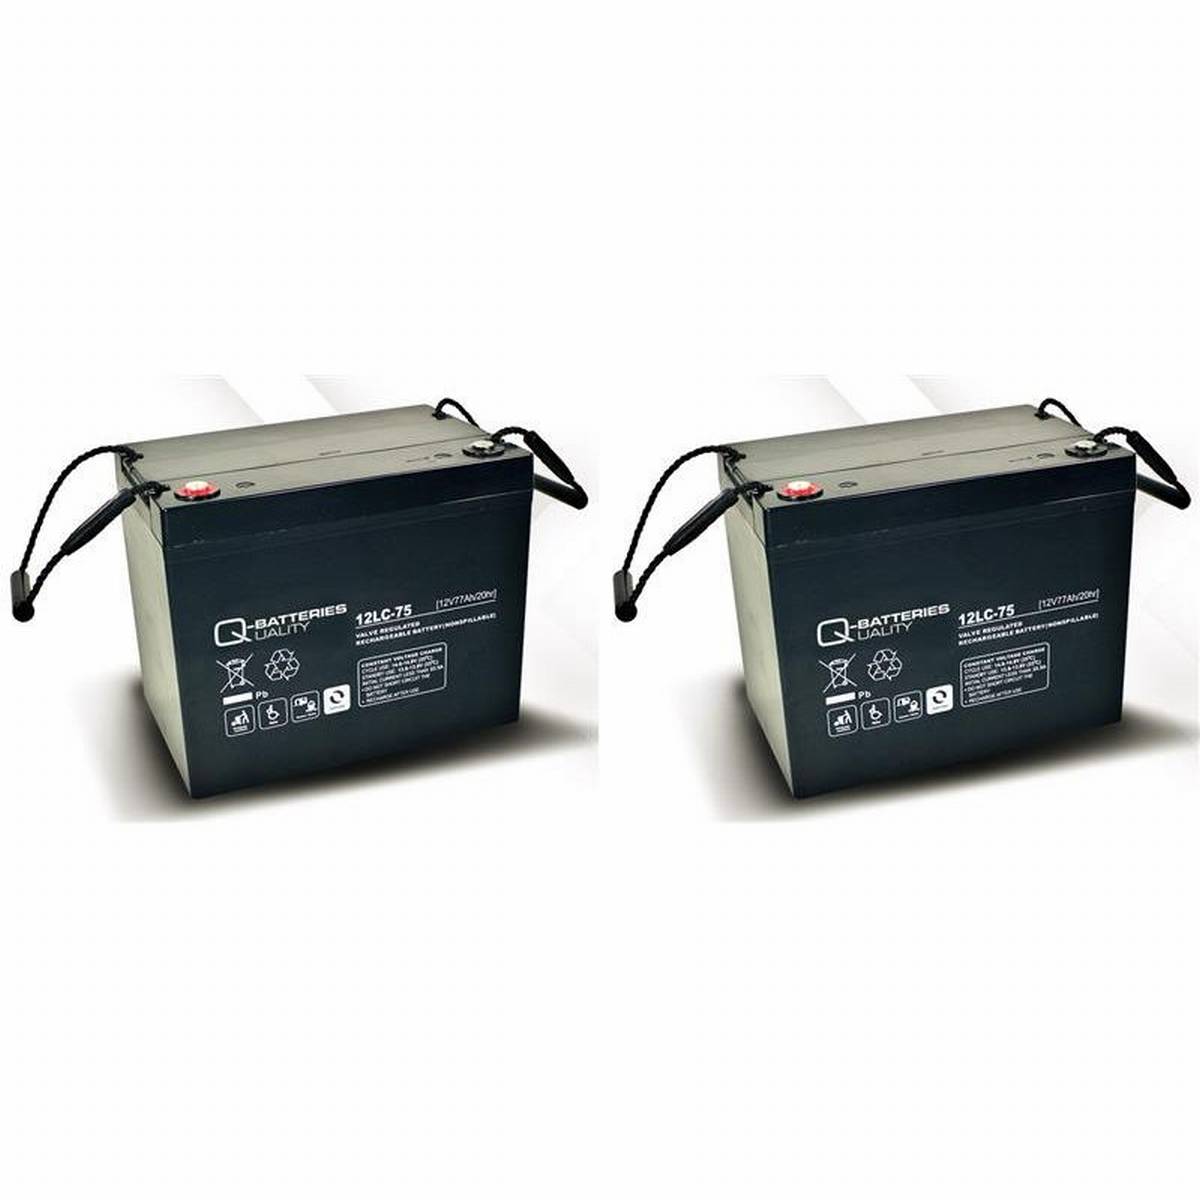 Batteria di ricambio per Sopur E140 2 pezzi Q-Batteries 12LC-75 12V 77Ah AGM batteria resistente al ciclo